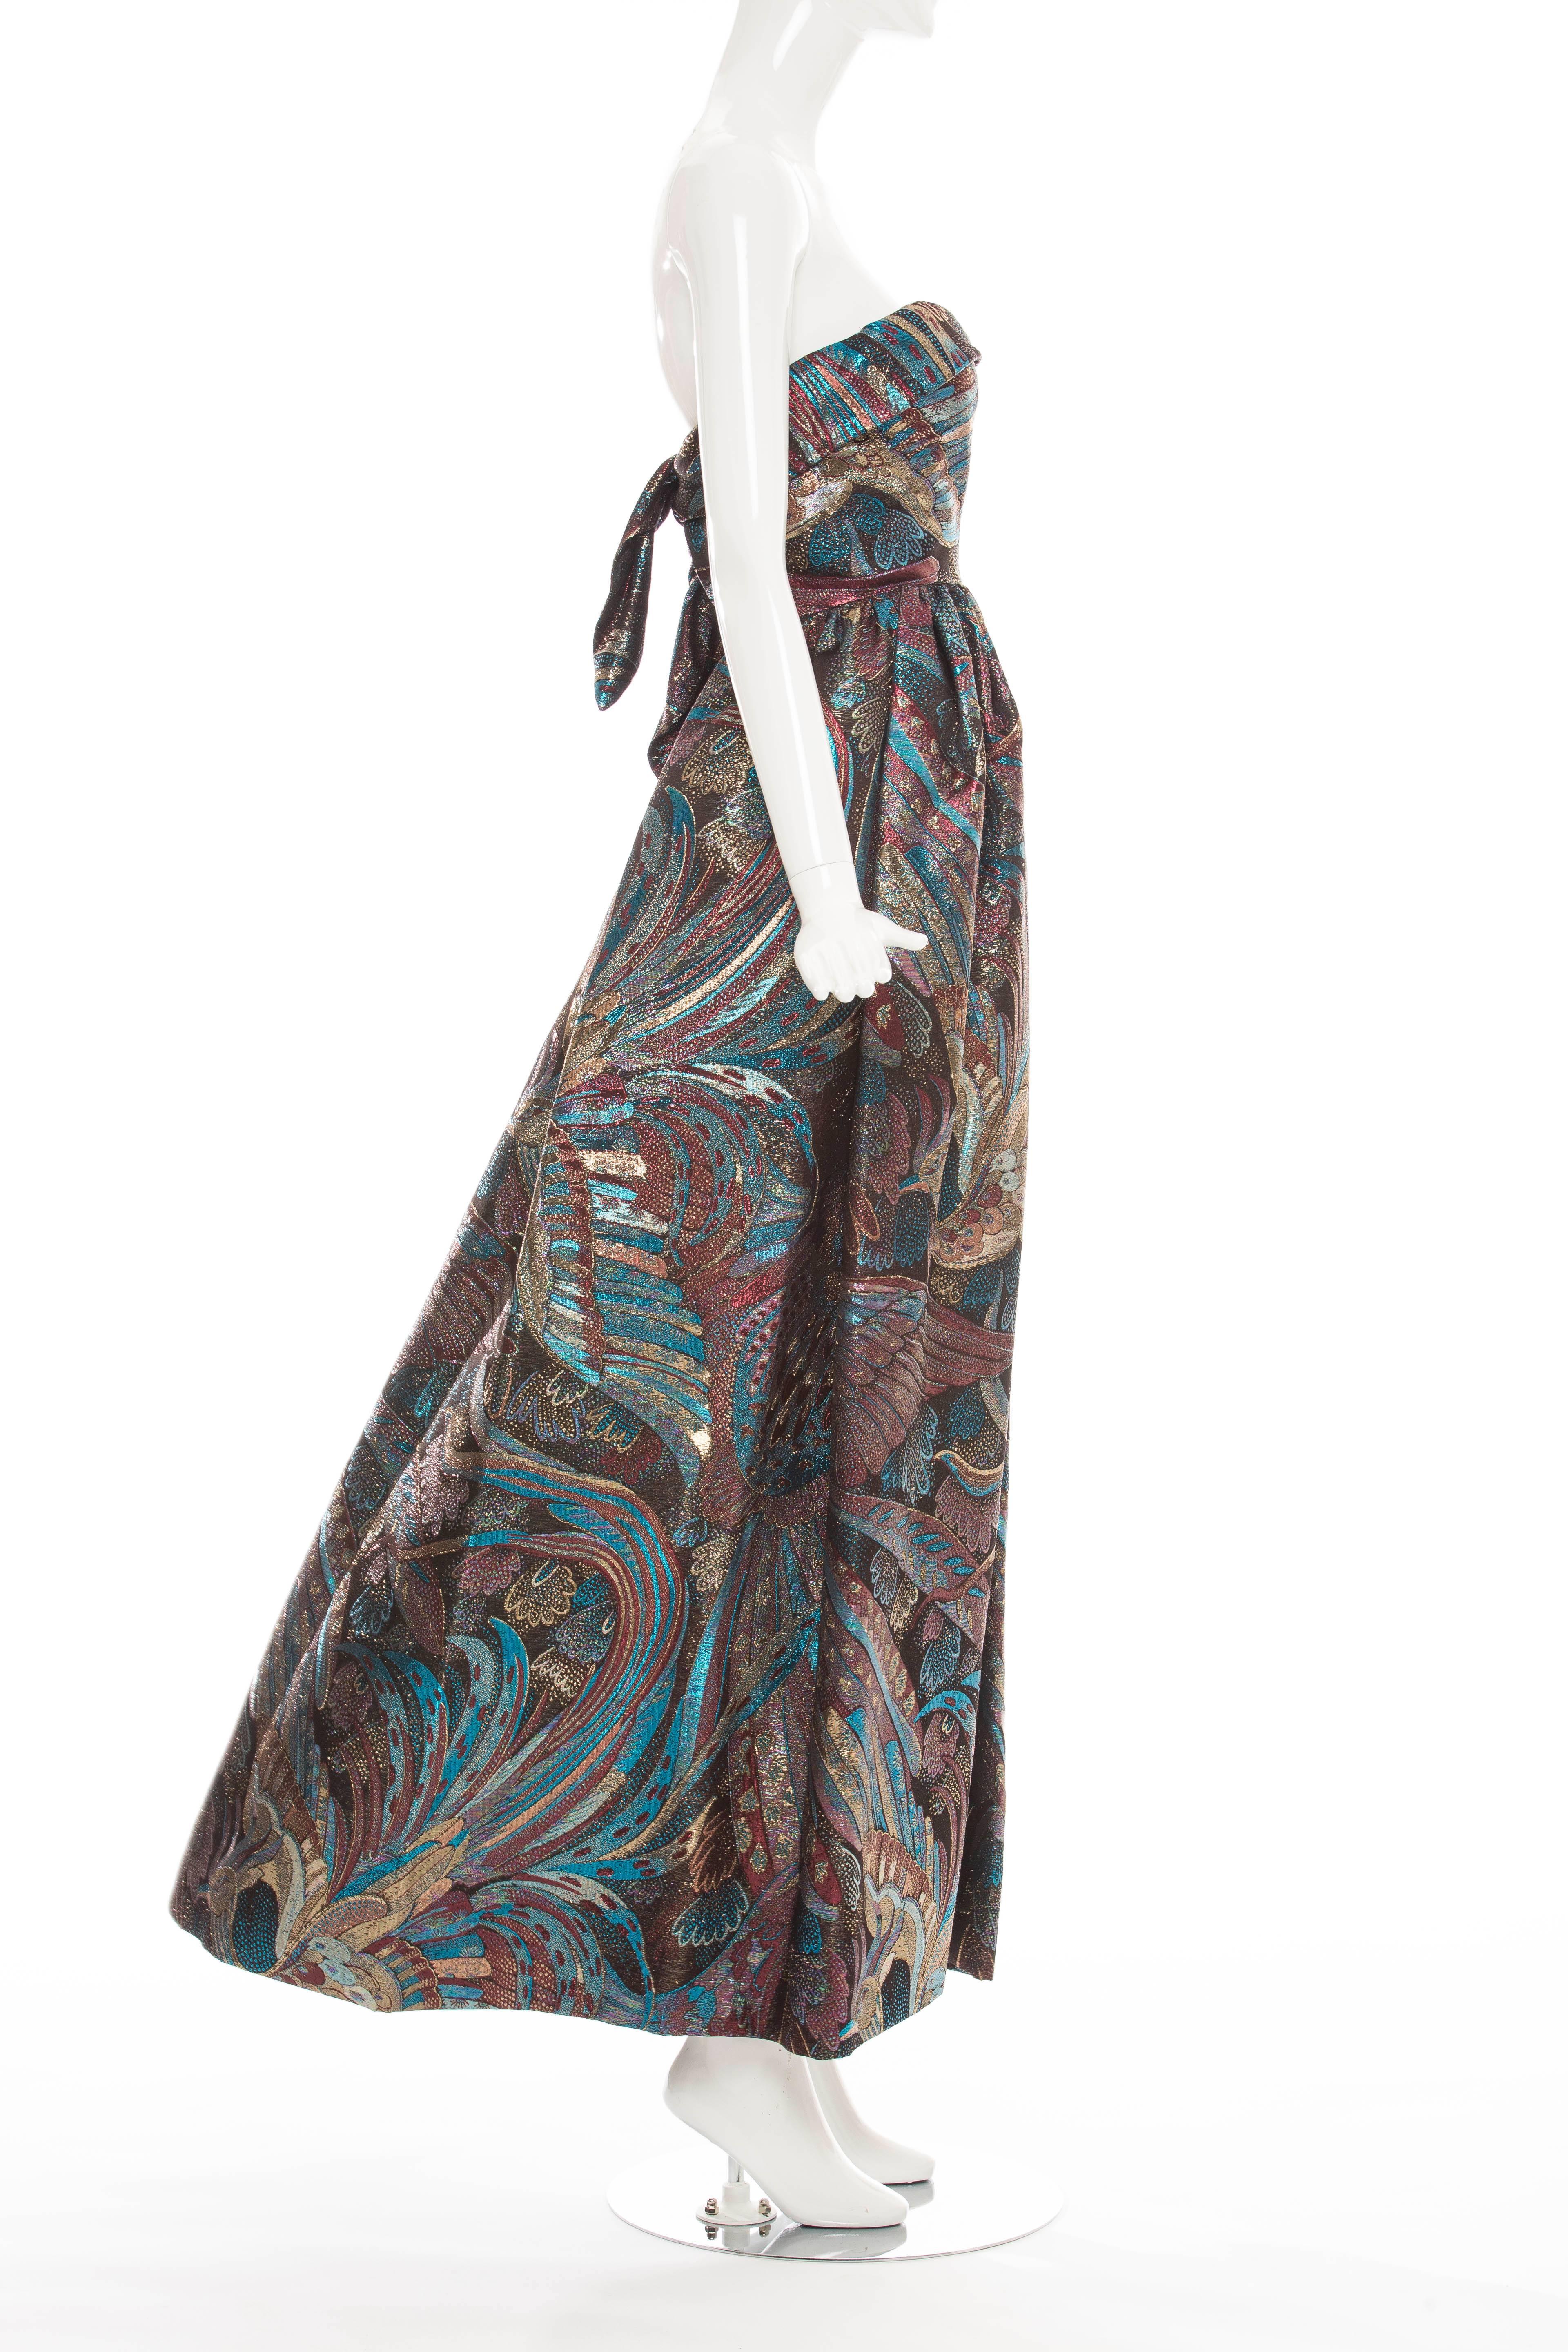 Pauline Trigere Strapless Metallic Brocade Dress Circa 1960's 3